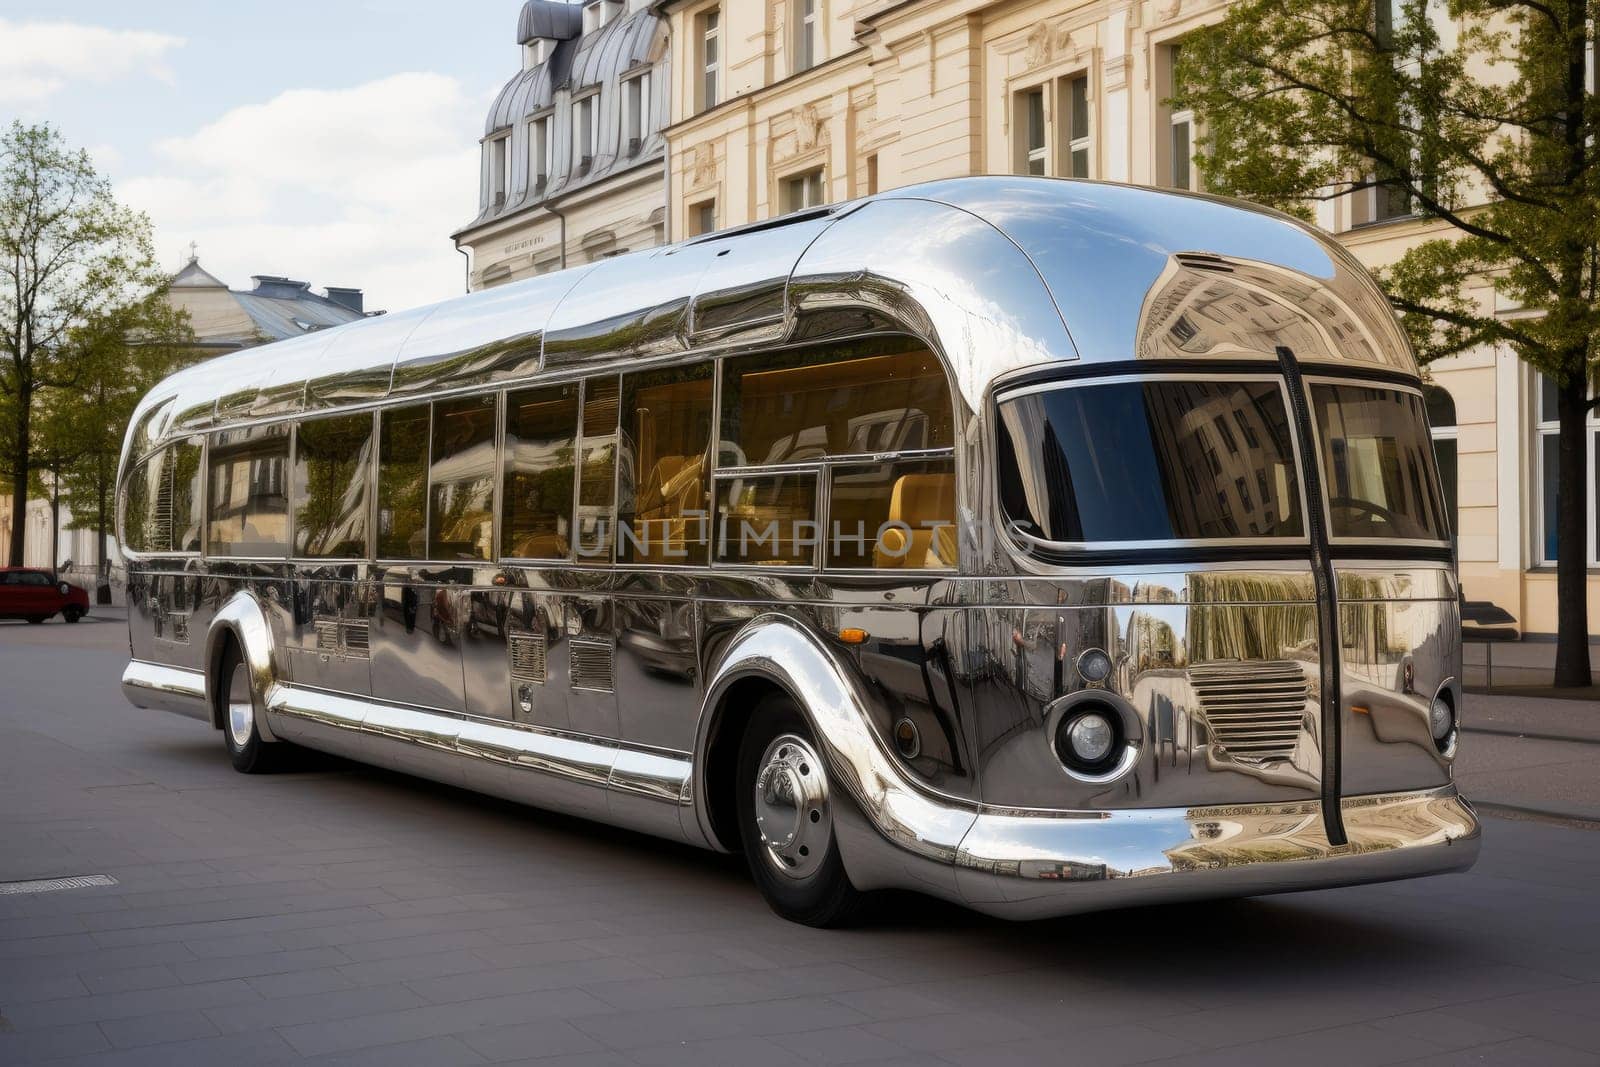 Luxurious Silver tourist bus. Modern big vehicle. Generate Ai